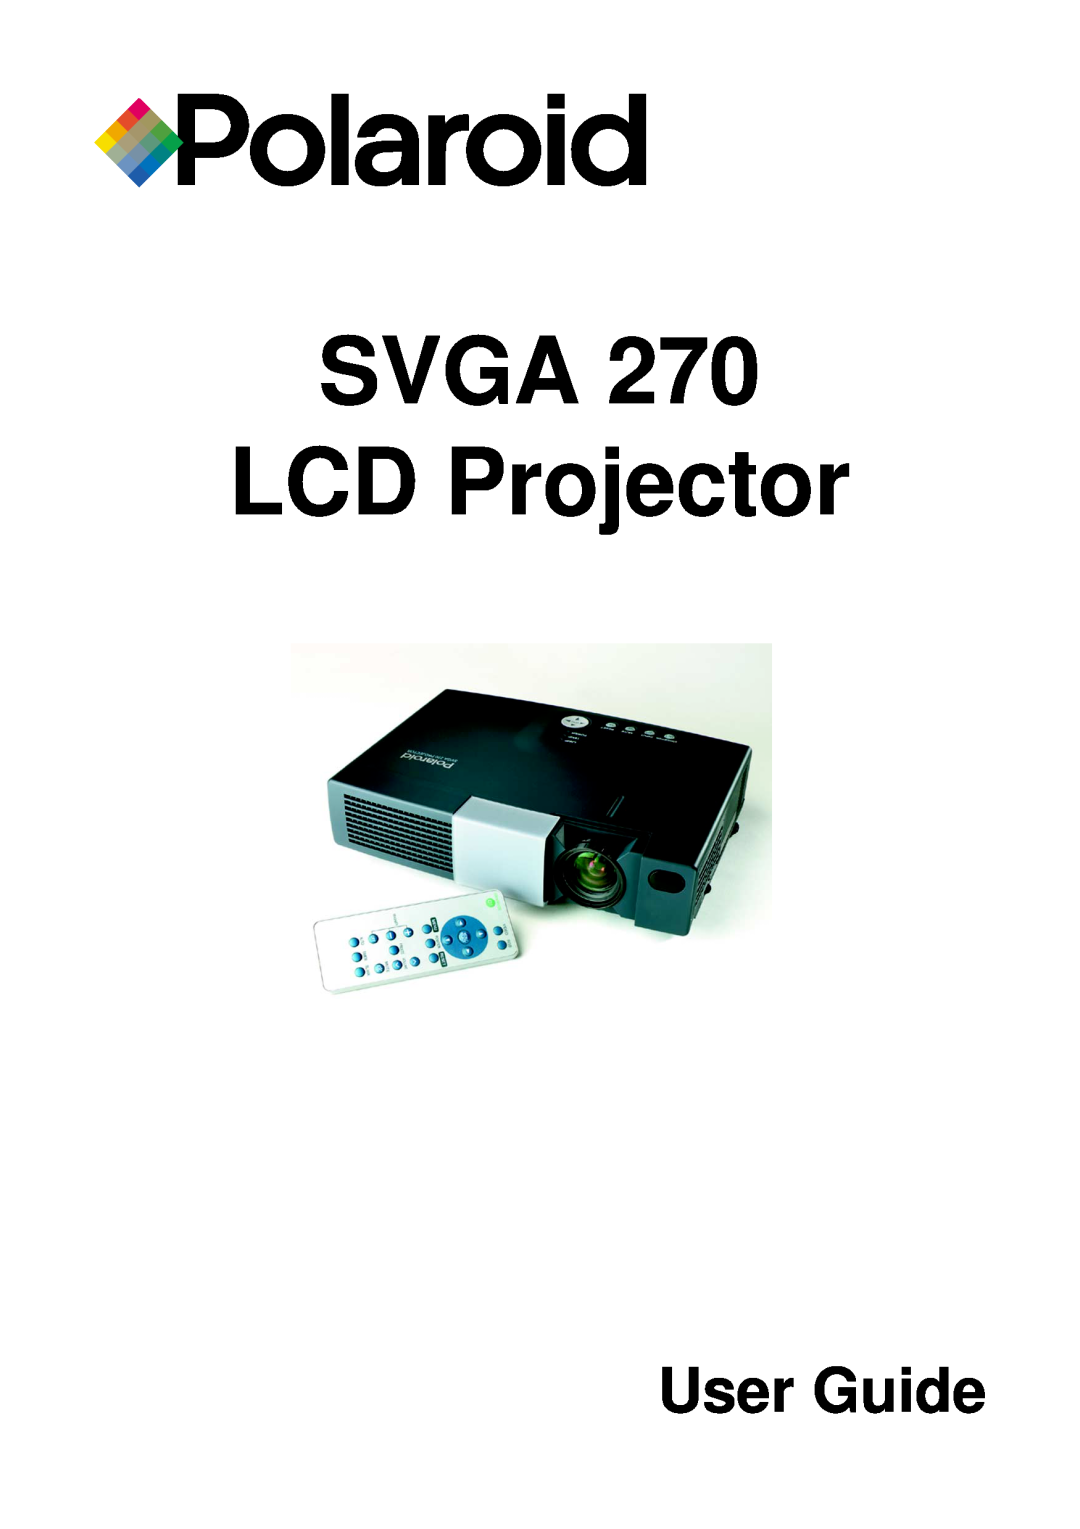 Polaroid SVGA 270 manual User Guide, SVGA LCD Projector 